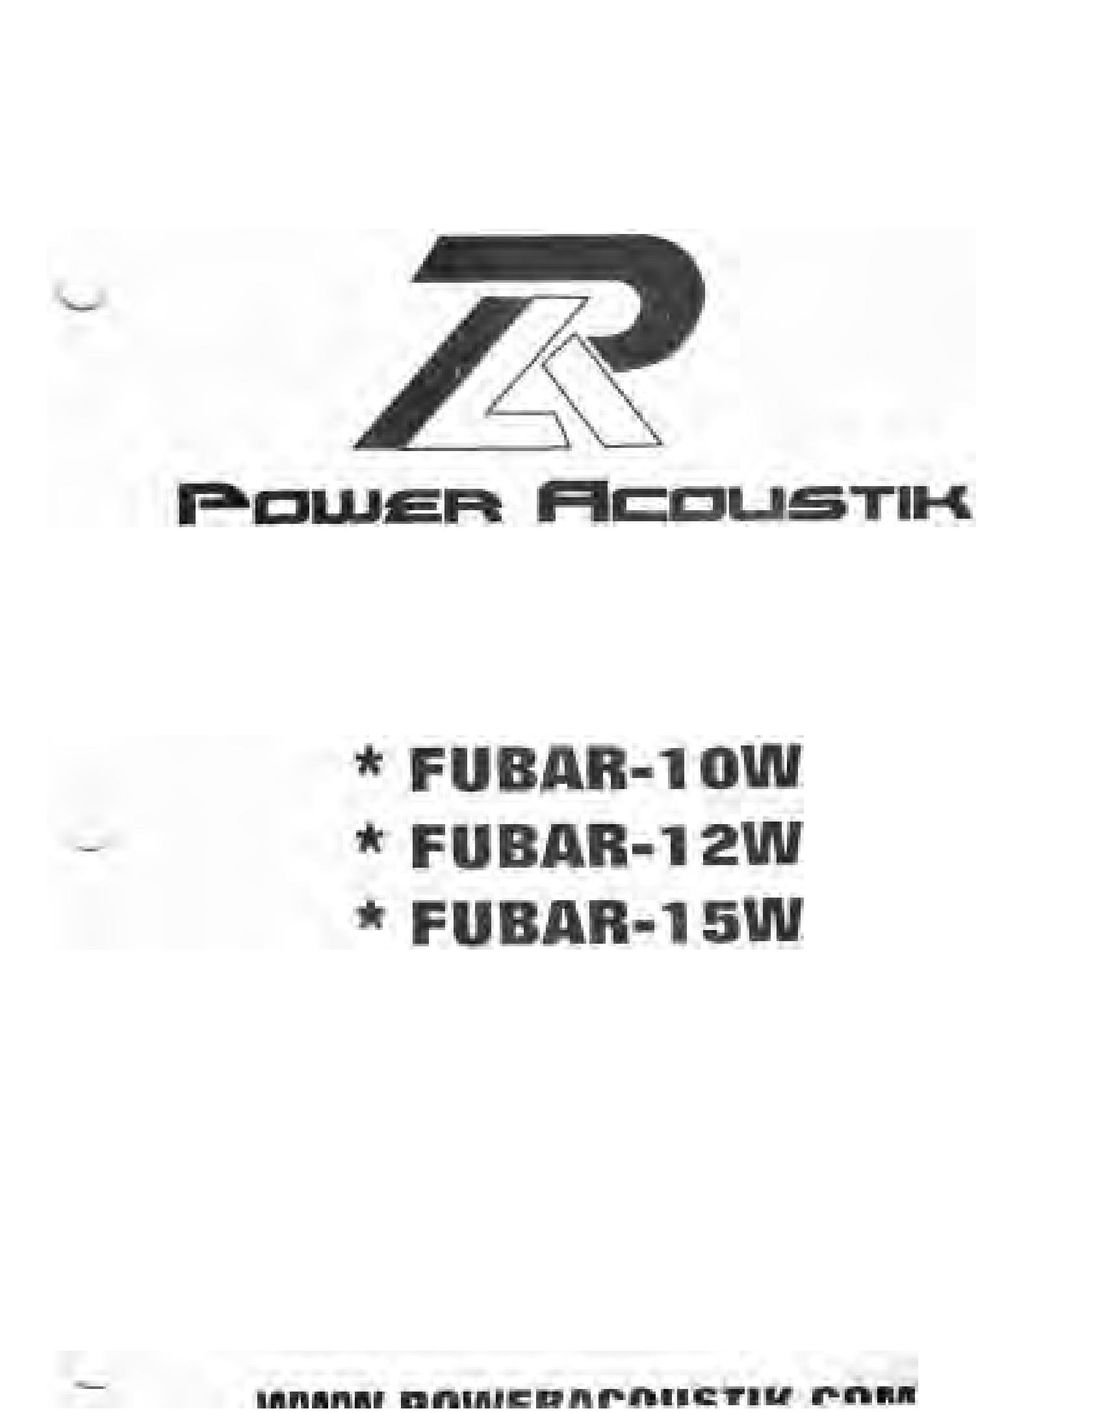 Power Acoustik FUBAR-15W Car Speaker User Manual